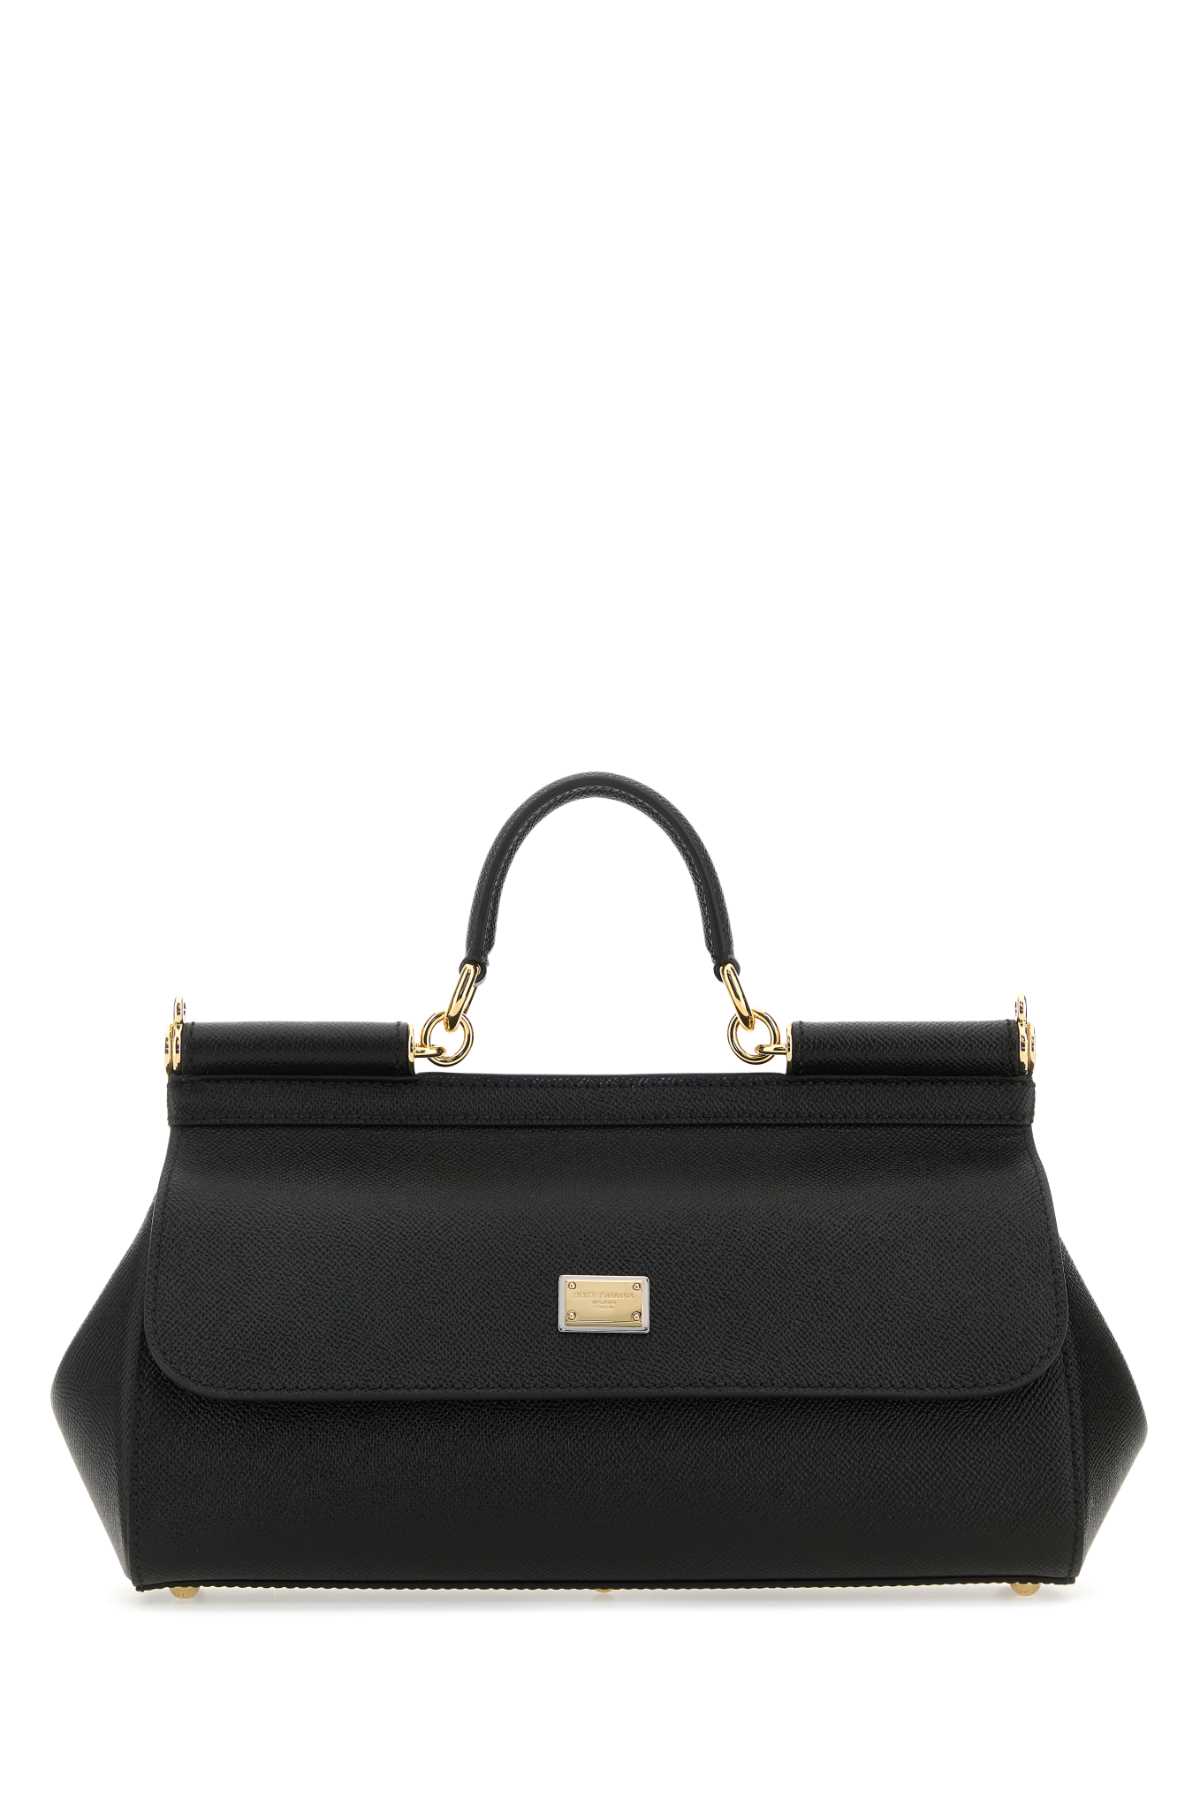 Dolce & Gabbana Black Leather Medium Sicily Handbag In 80999